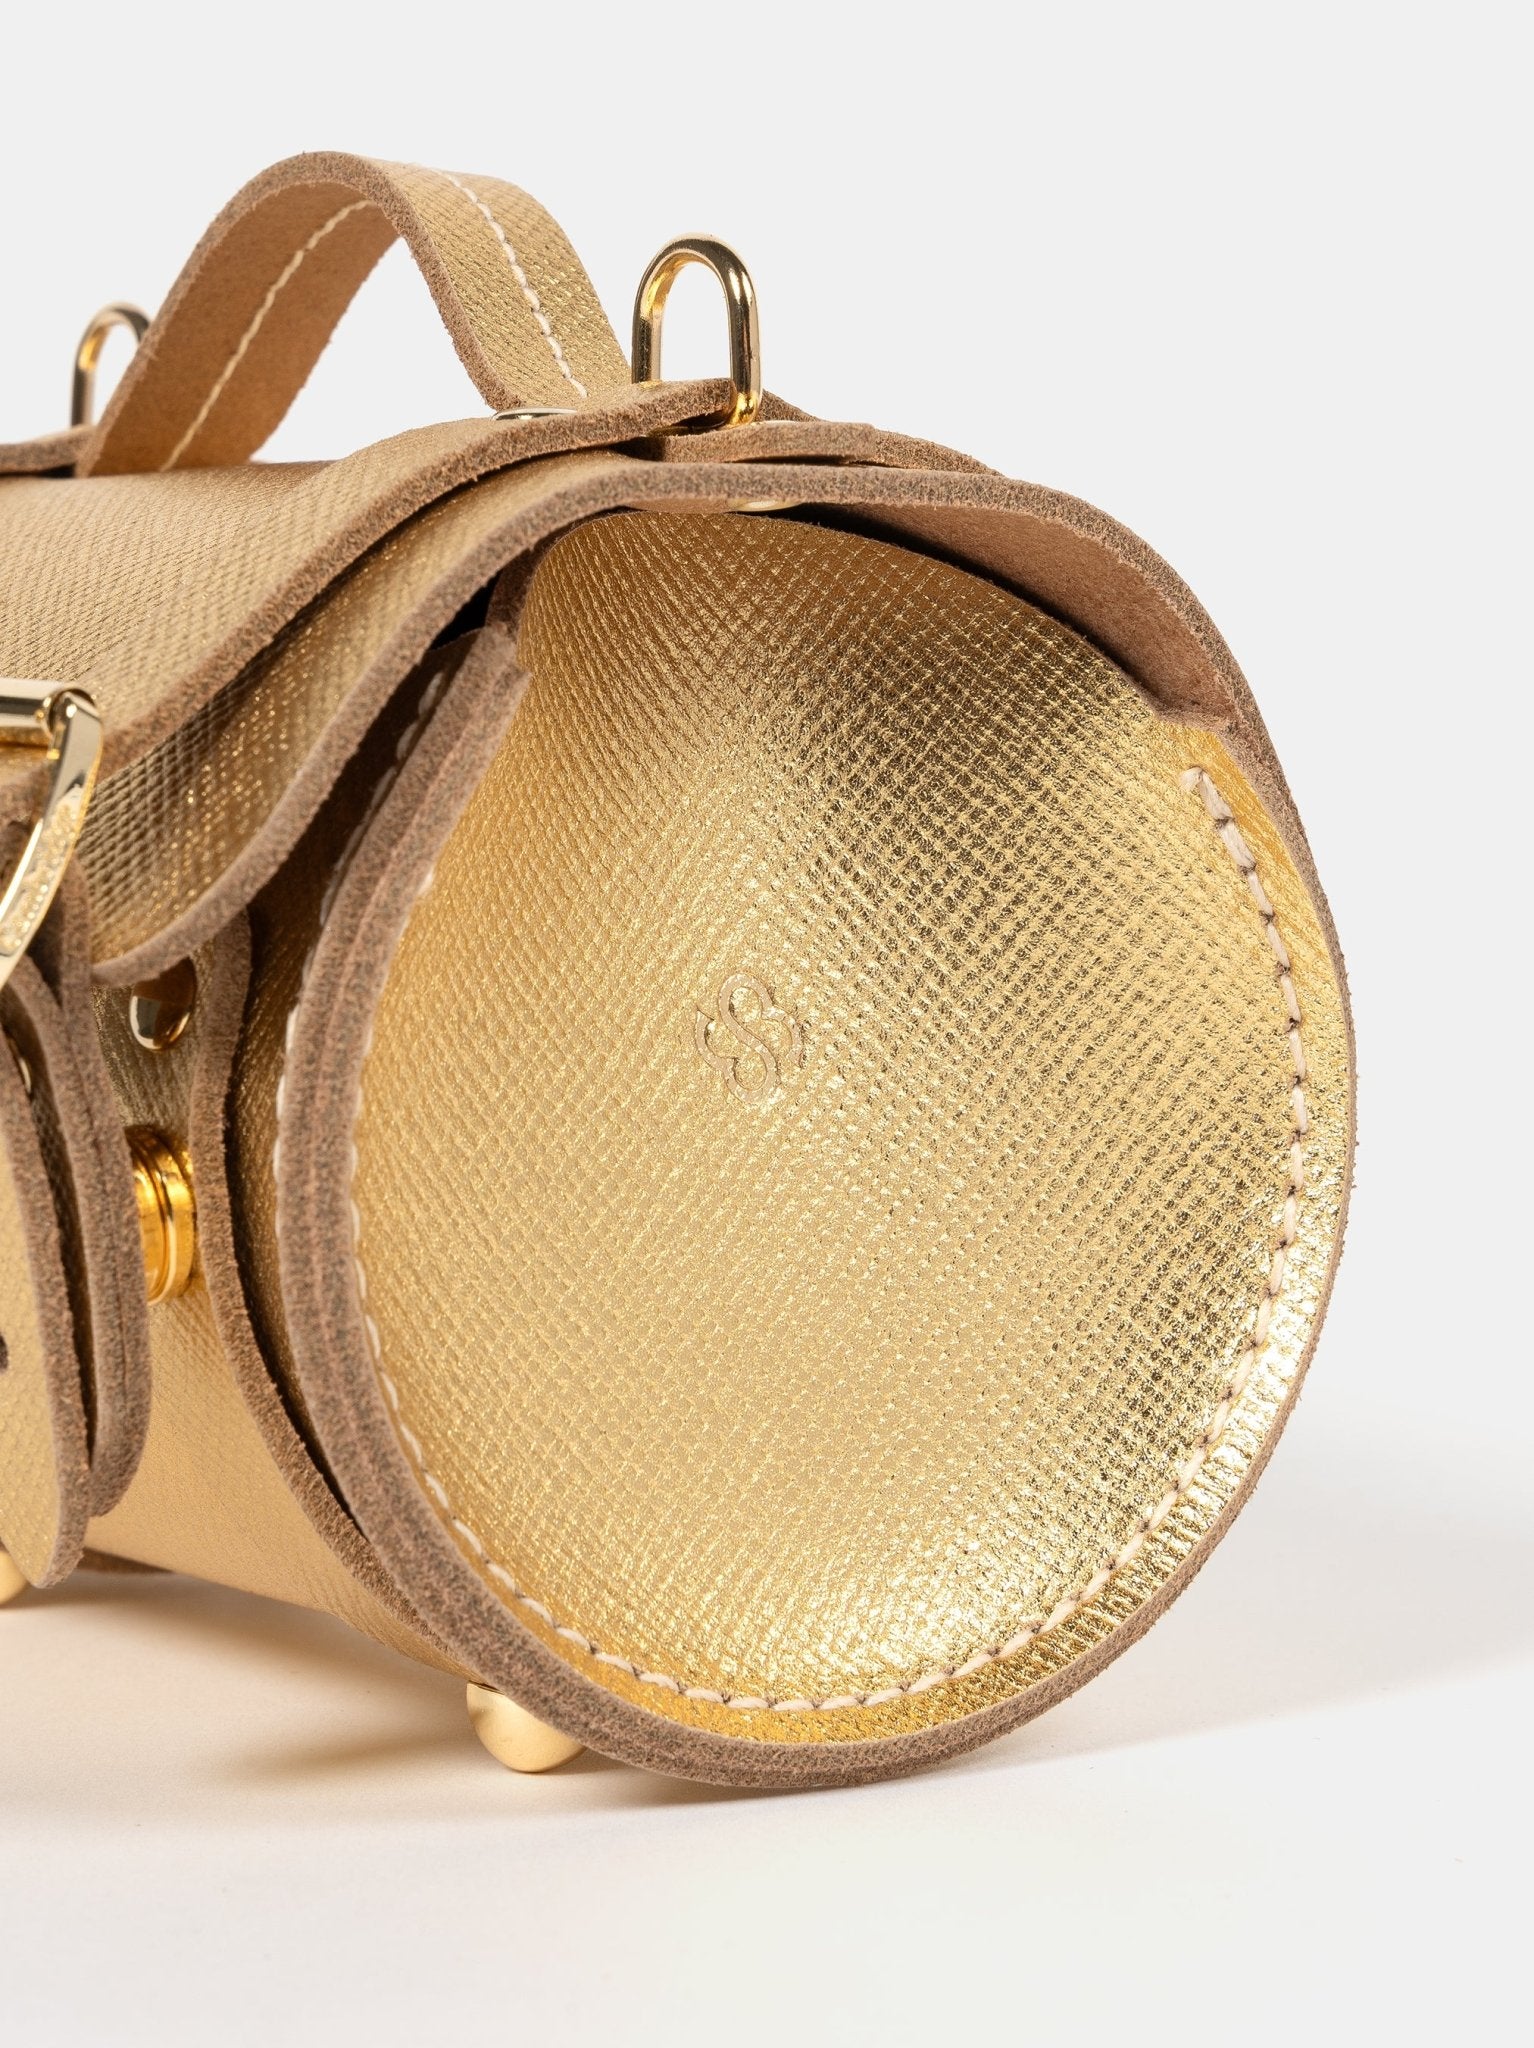 The Micro Bowls Bag - Foil Gold Saffiano - Cambridge Satchel